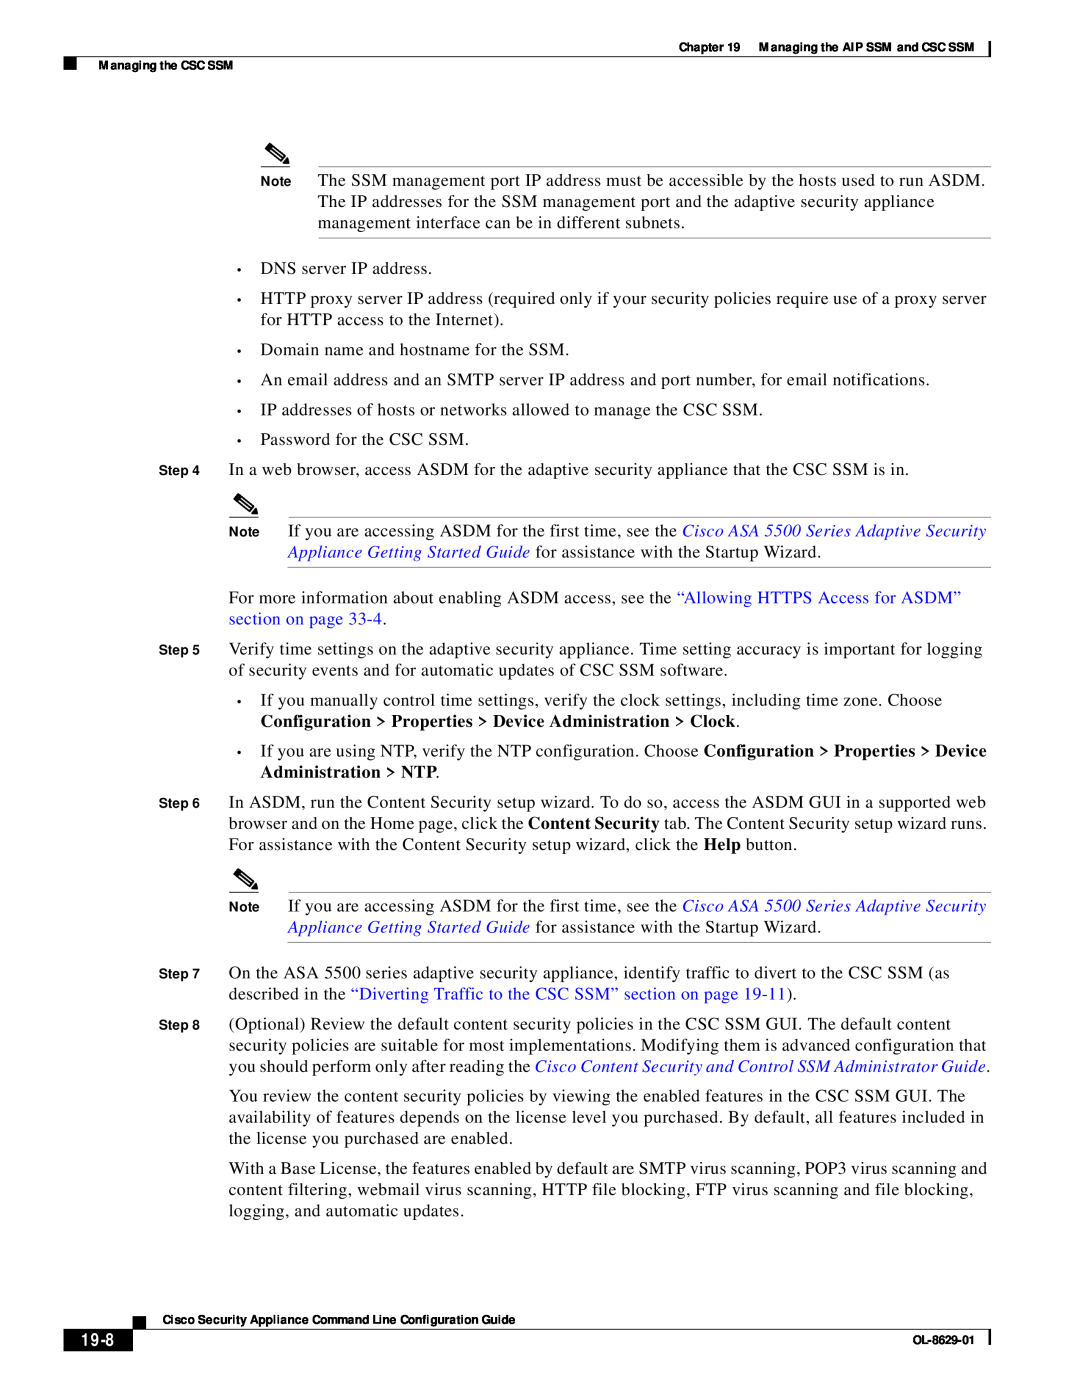 Cisco Systems ASA 5500 manual 19-8, •DNS server IP address 